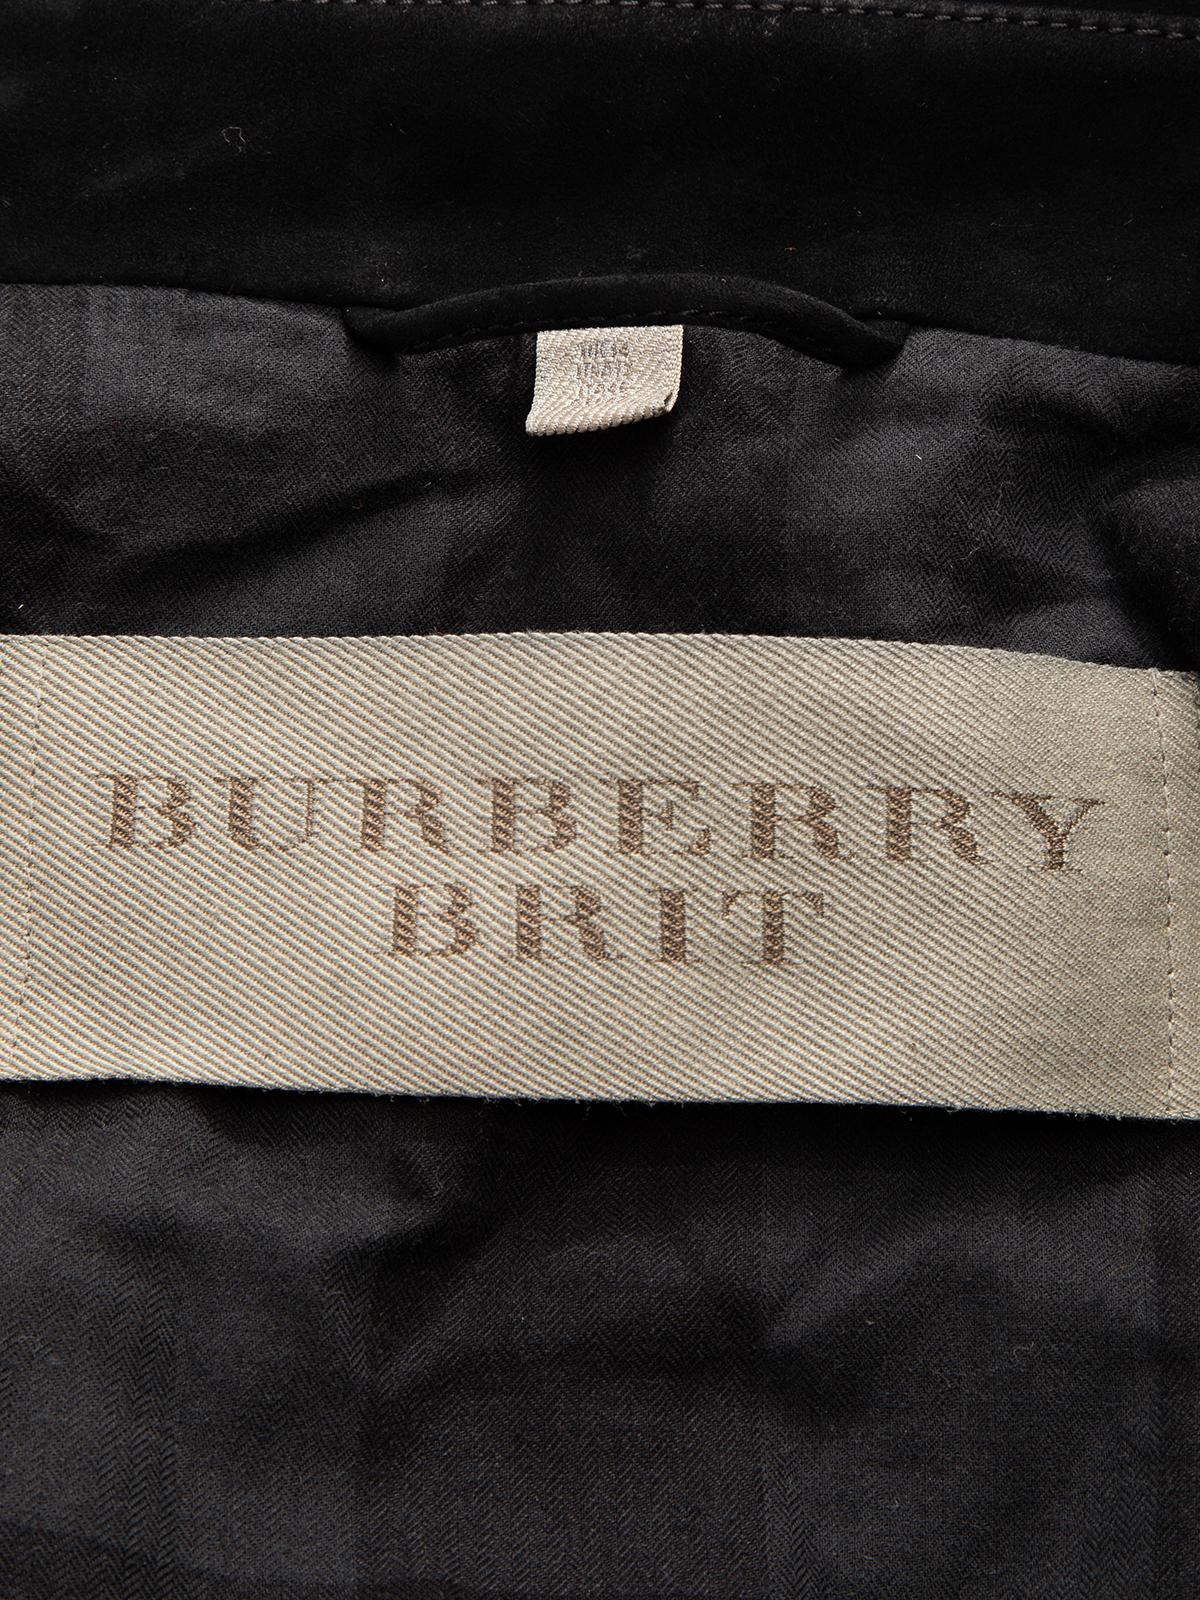 Pre-Loved Burberry Brit Women's Suede Biker Jacket 1